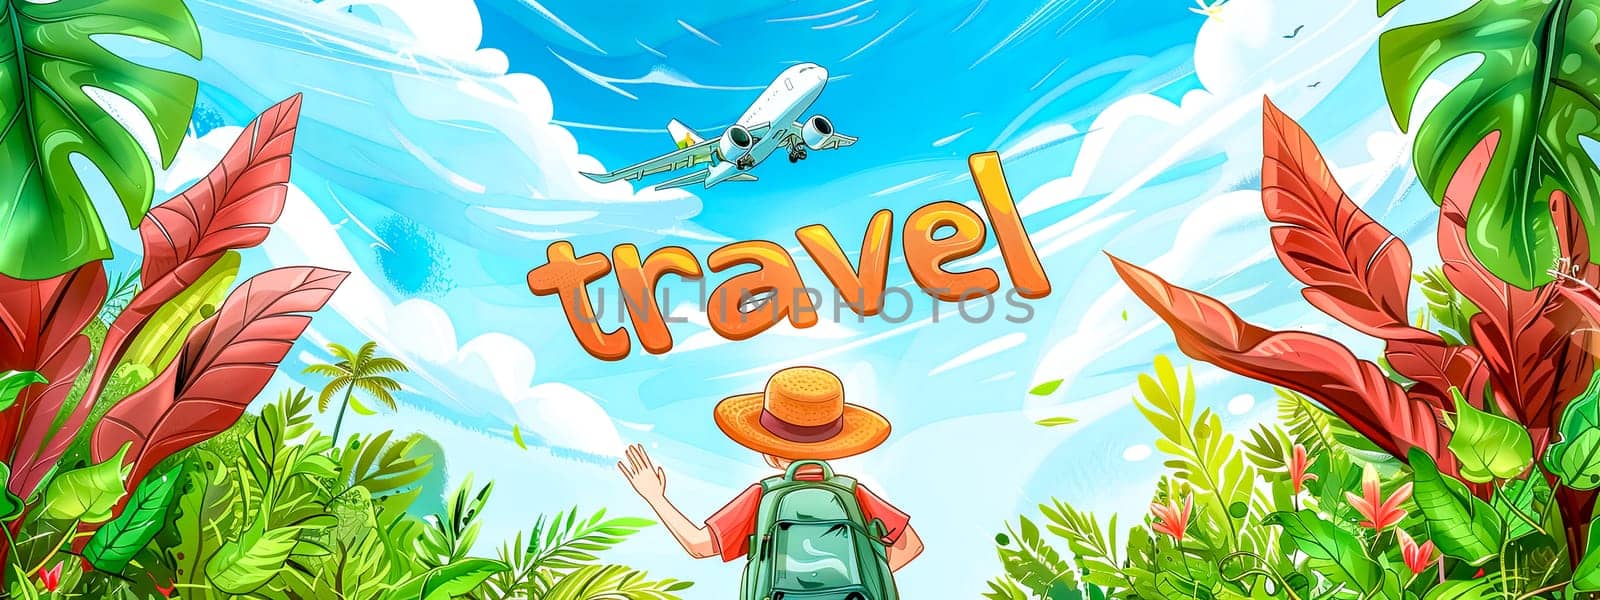 Tropical adventure travel concept illustration by Edophoto